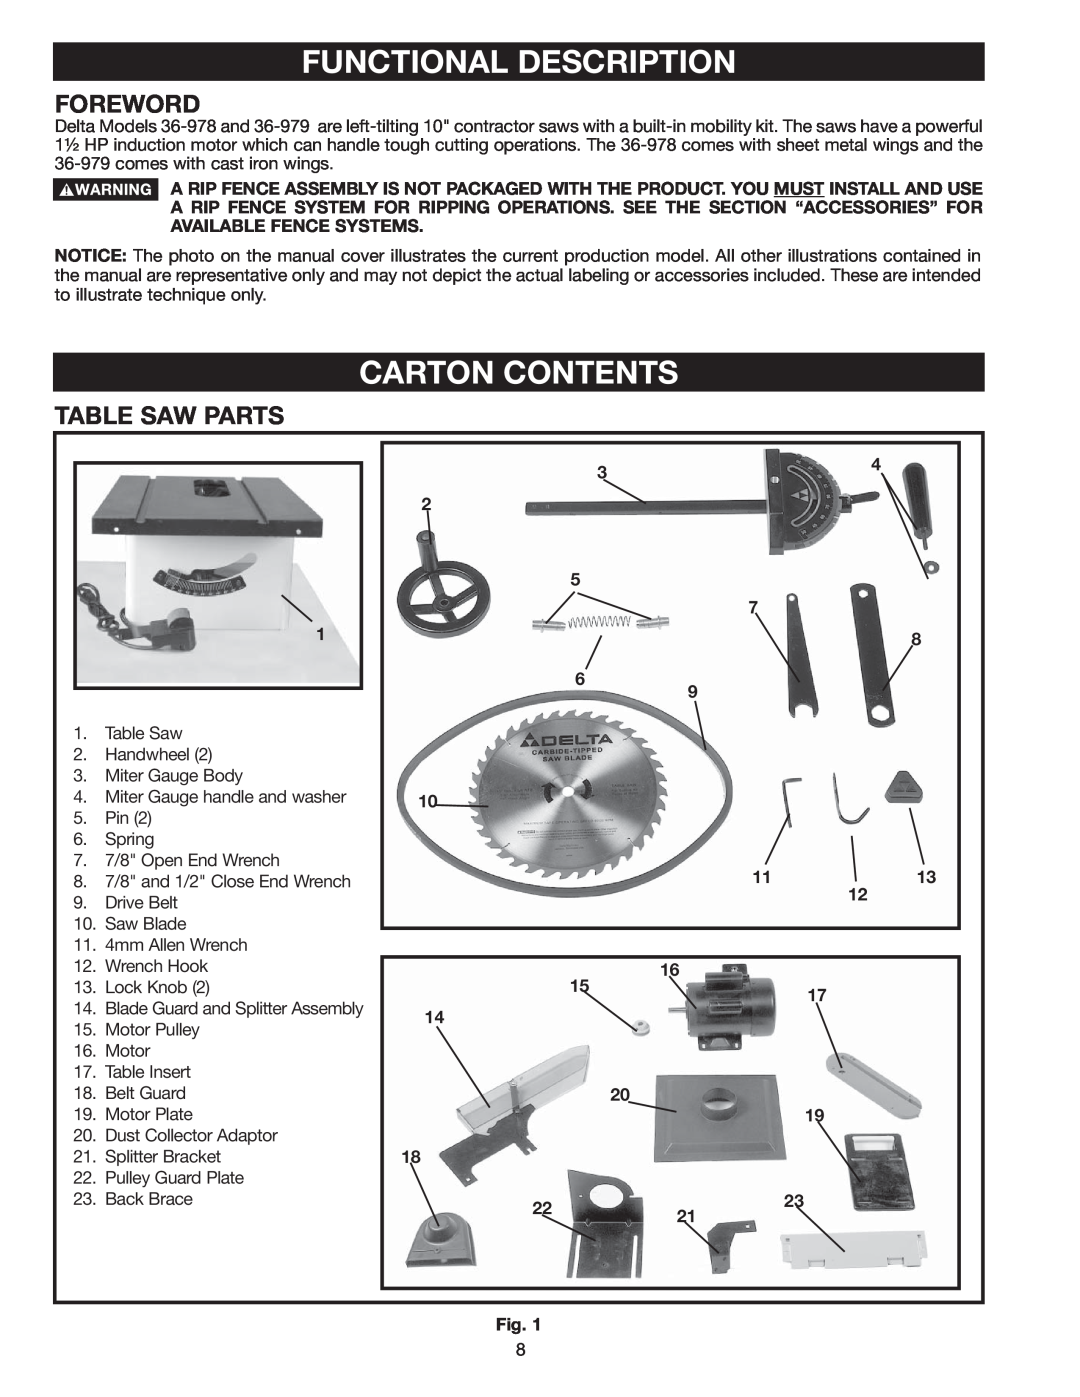 Delta 36-978 instruction manual Functional Description, Carton Contents, Foreword, Table Saw Parts 